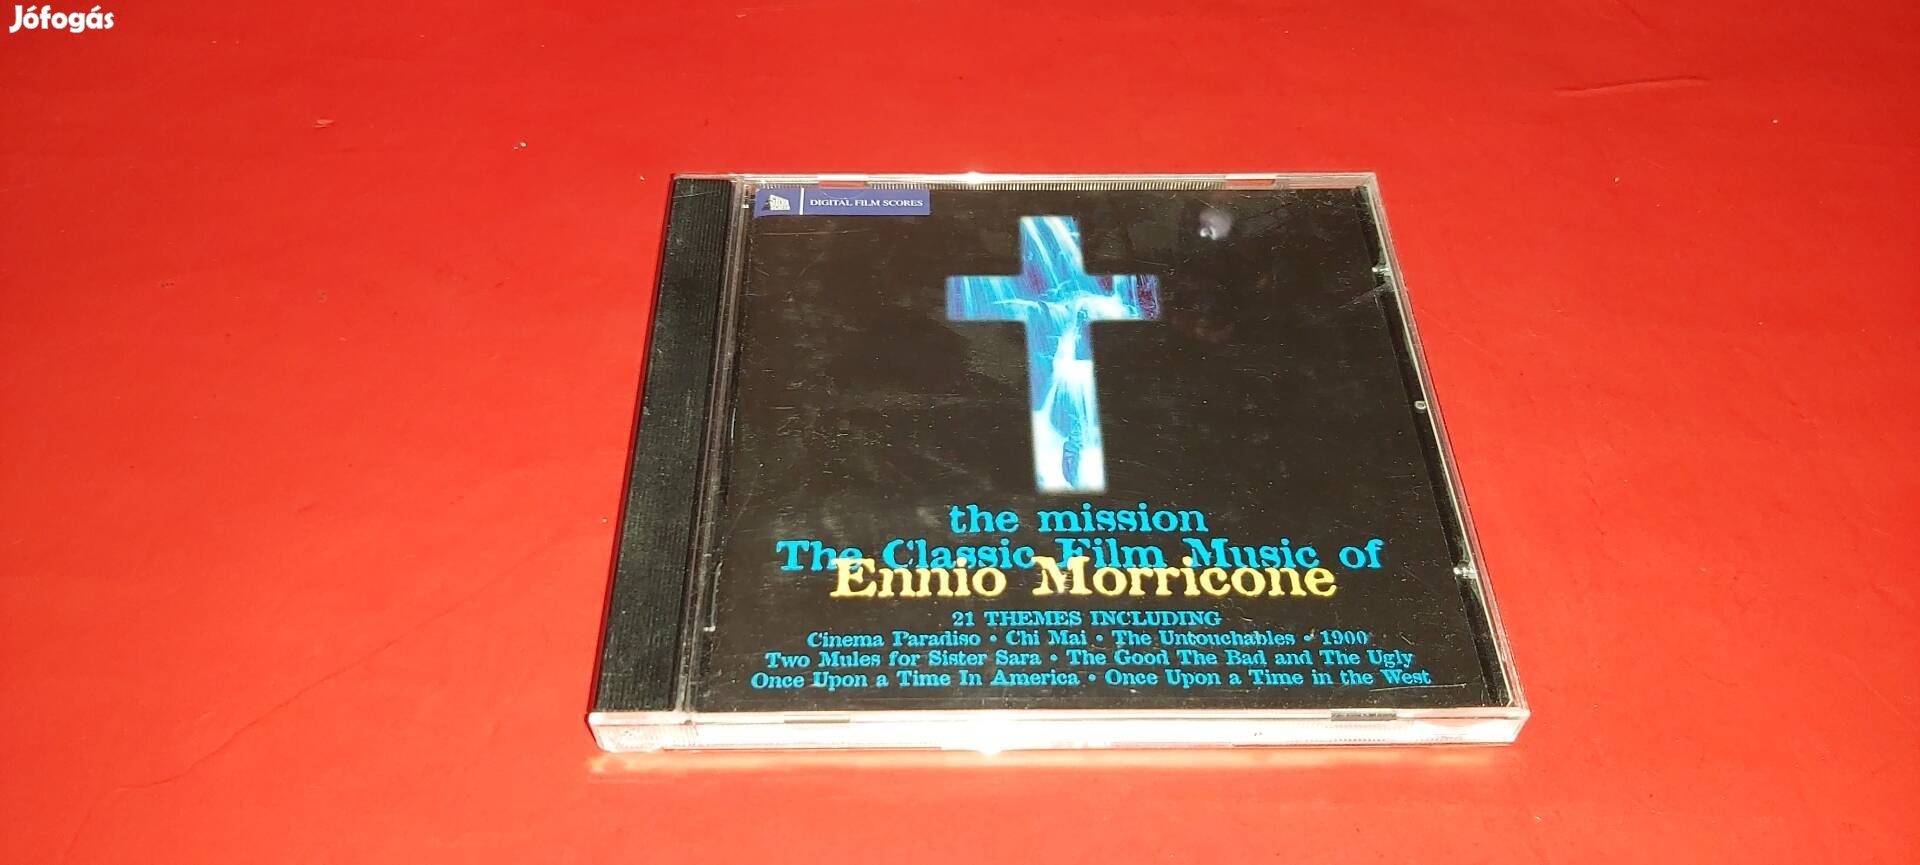 Ennio Morricone The mission Cd 1996